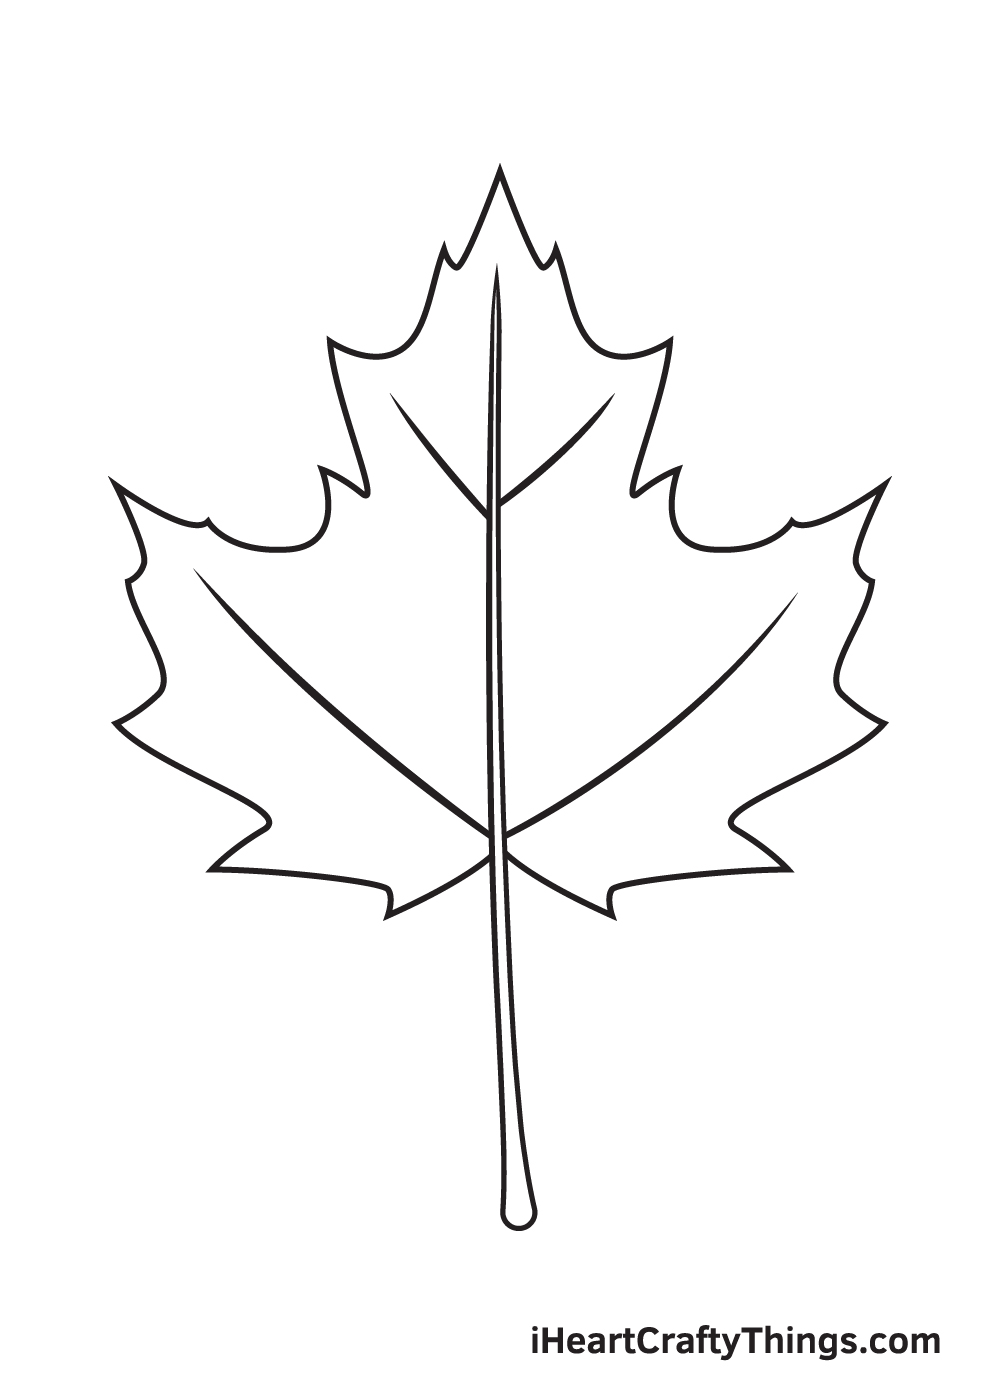 Autumn Leaf Drawing Image